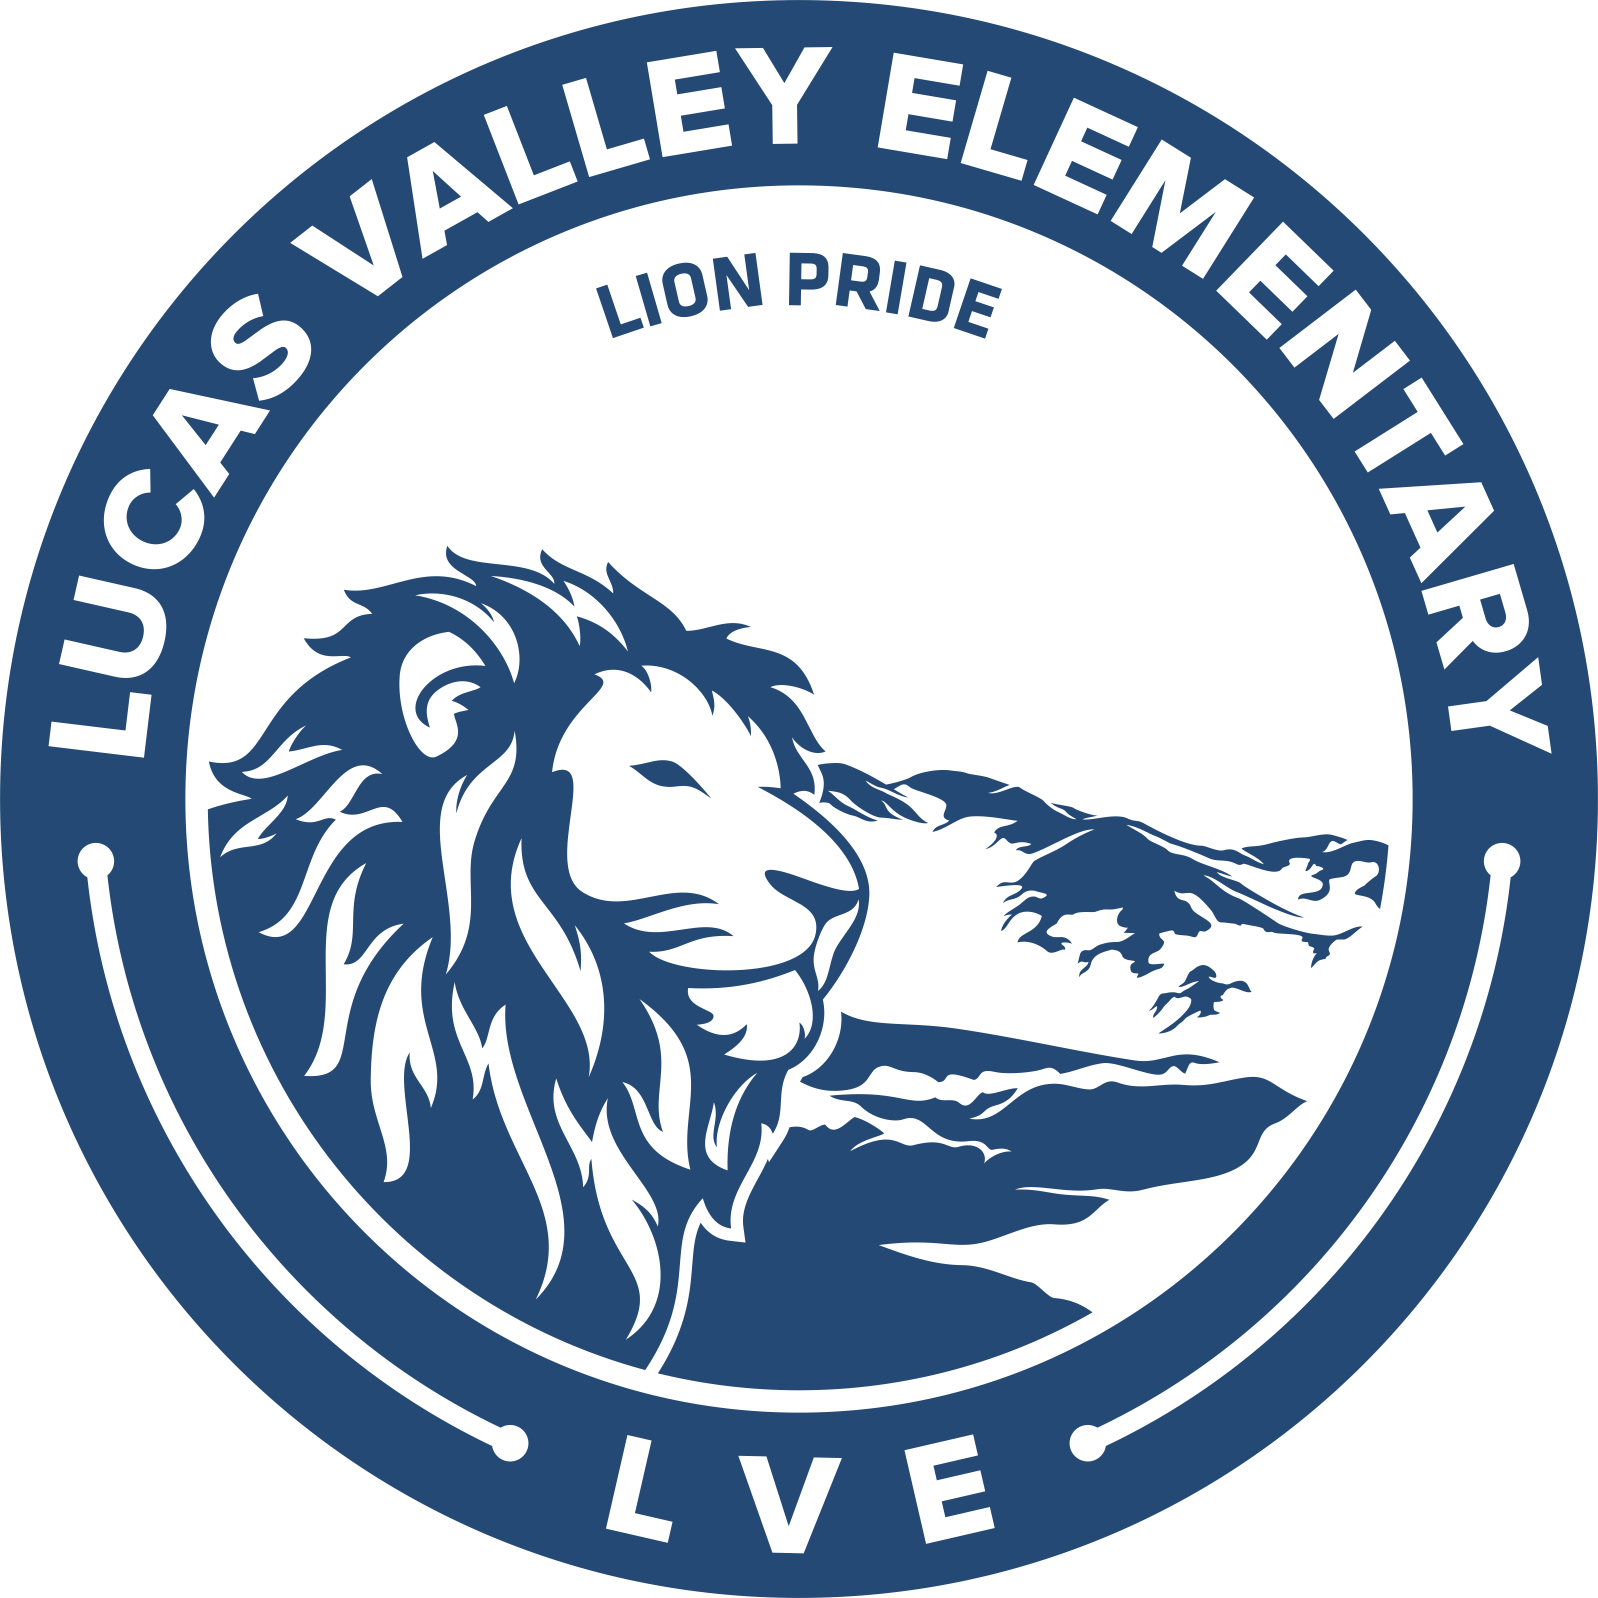 View Lucas Valley Elementary School